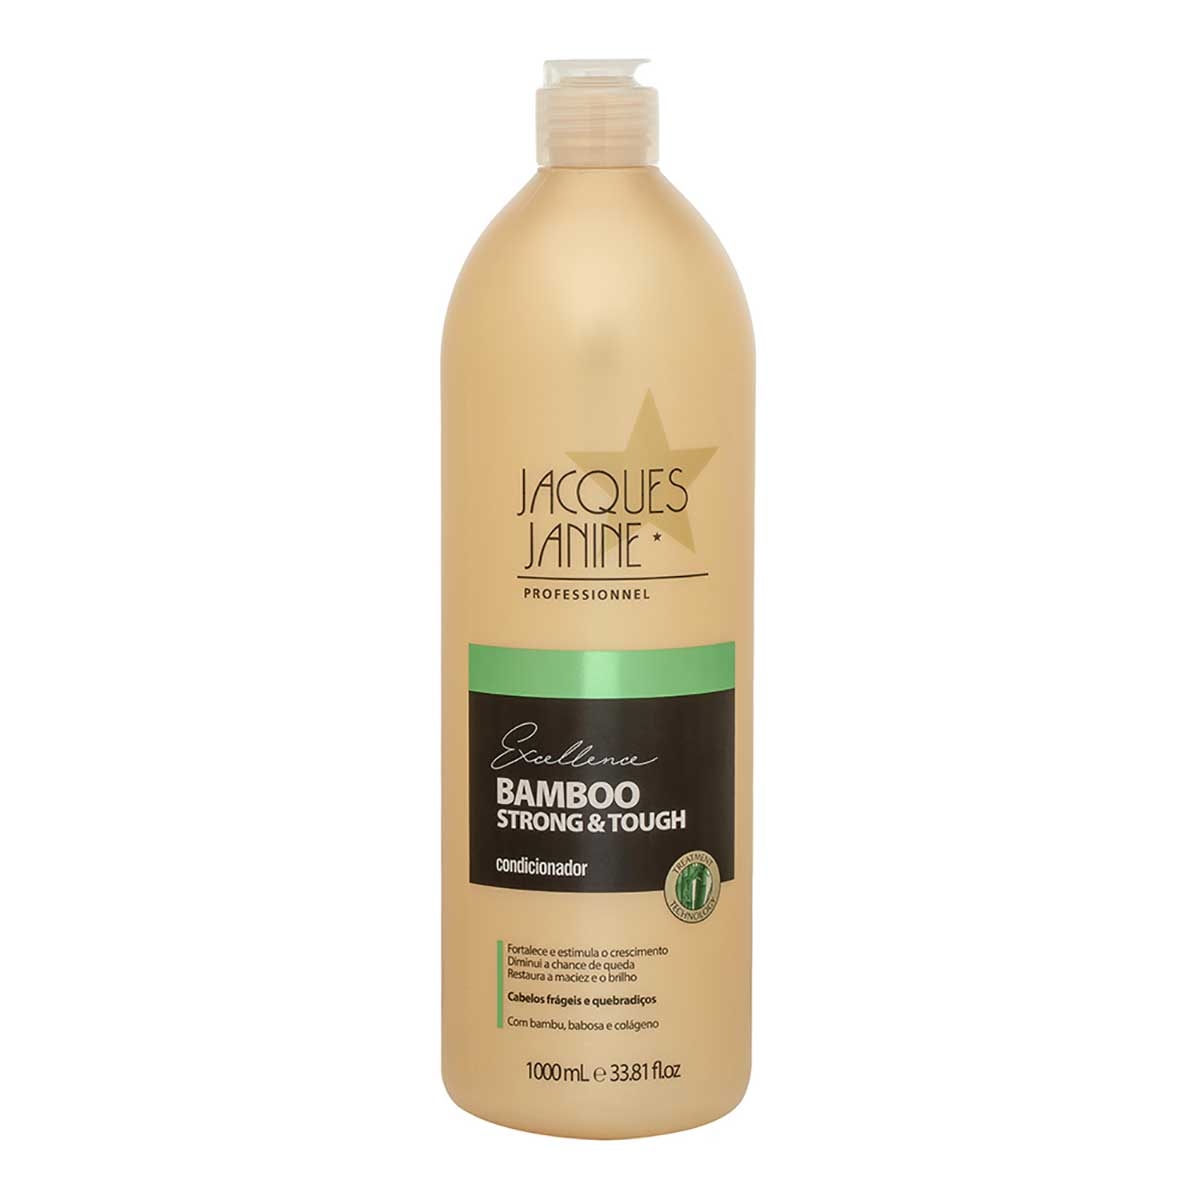 Shampoo Jacques Janine Bamboo Strong & Tough com 1000ml 1000ml